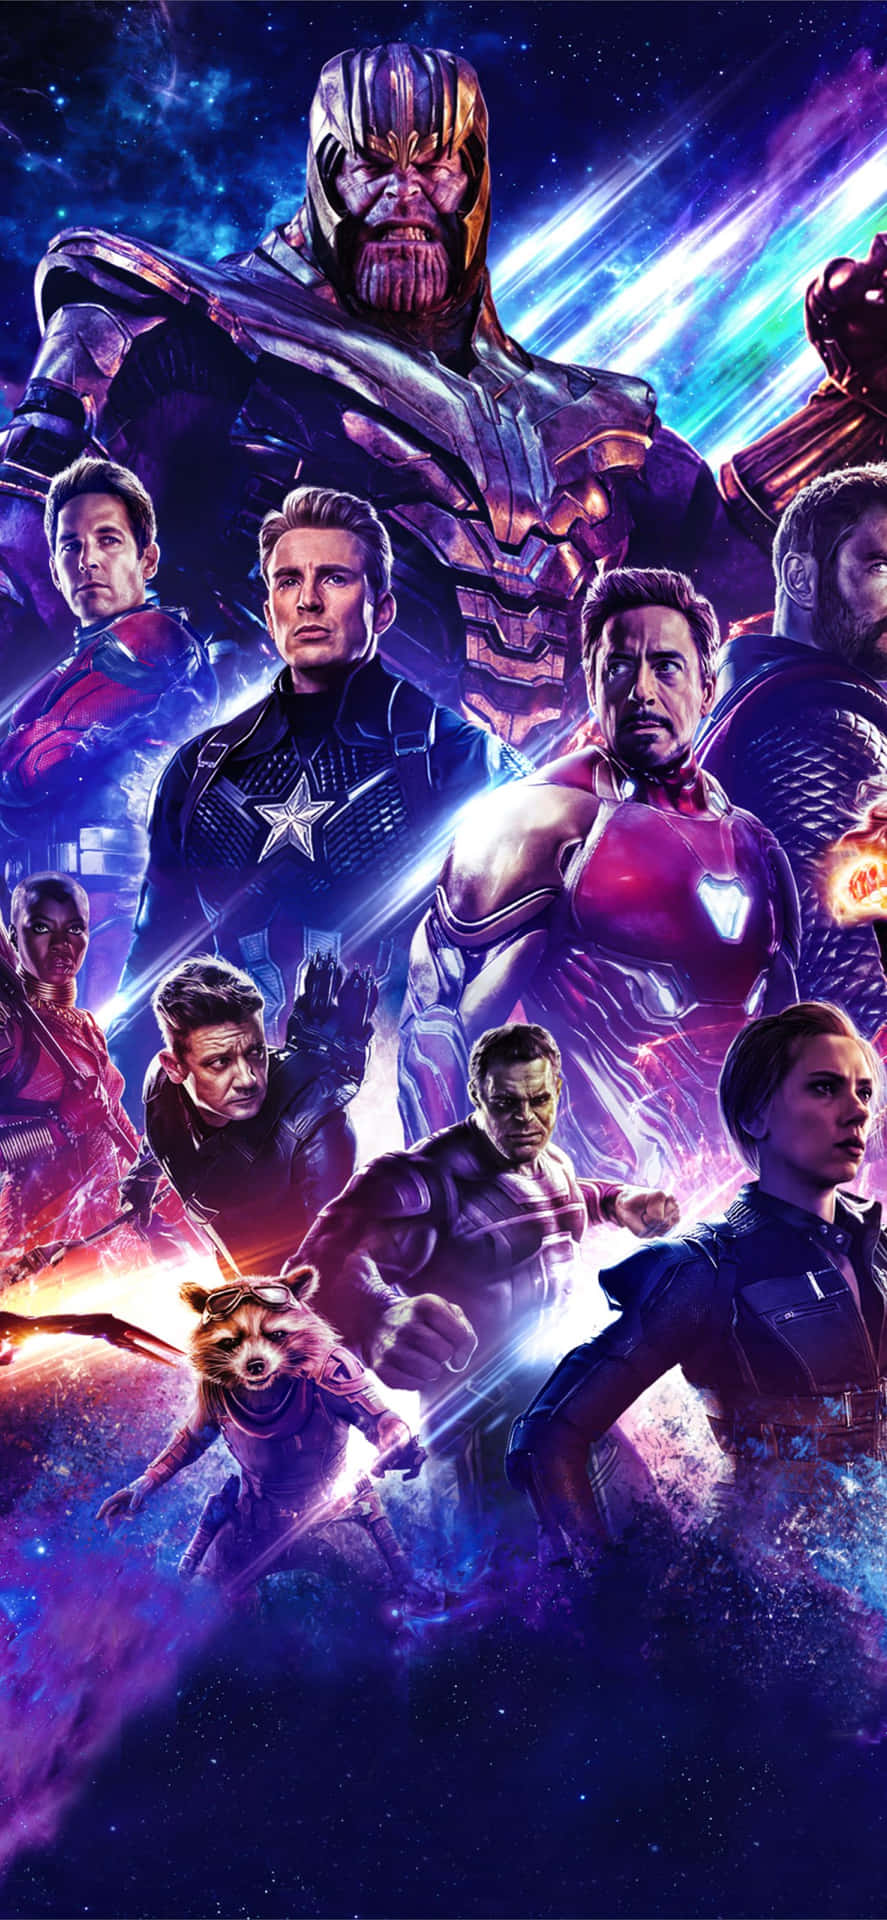 !Få din nye iPhone med Avengers Endgame-tema nu! Wallpaper